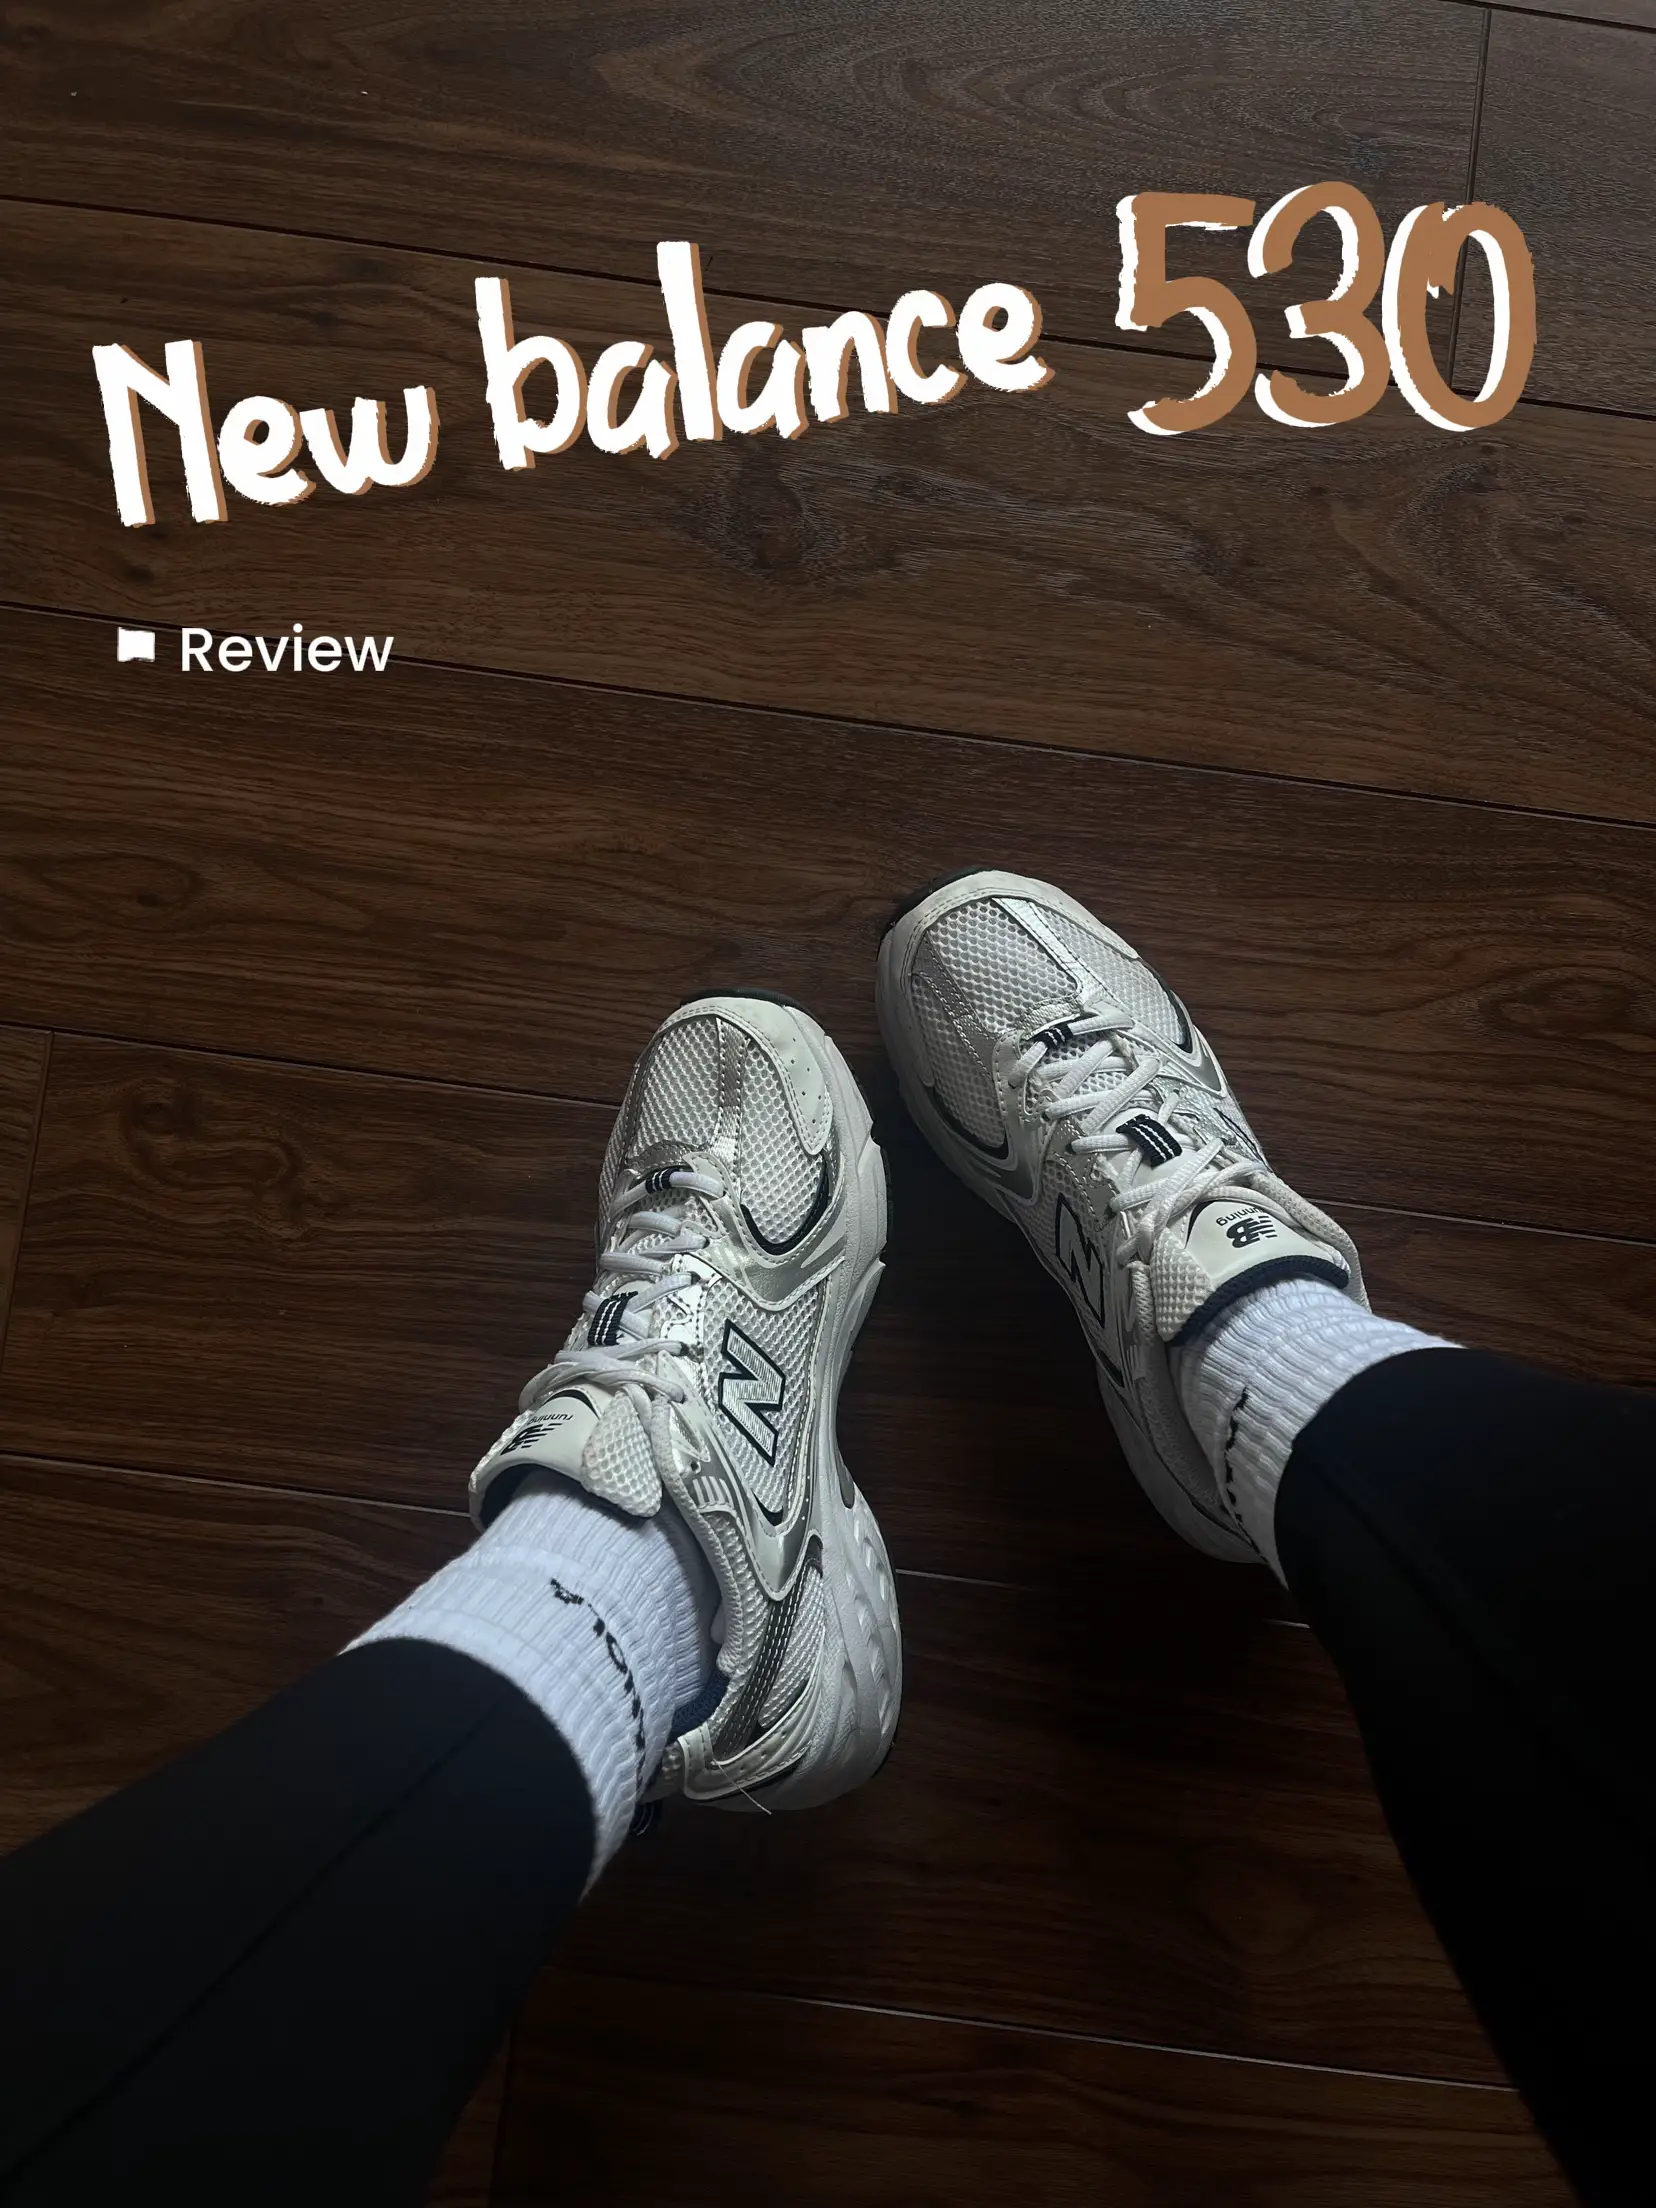 New Balance 530  Walking shoes women, Dad shoes, New balance shoes